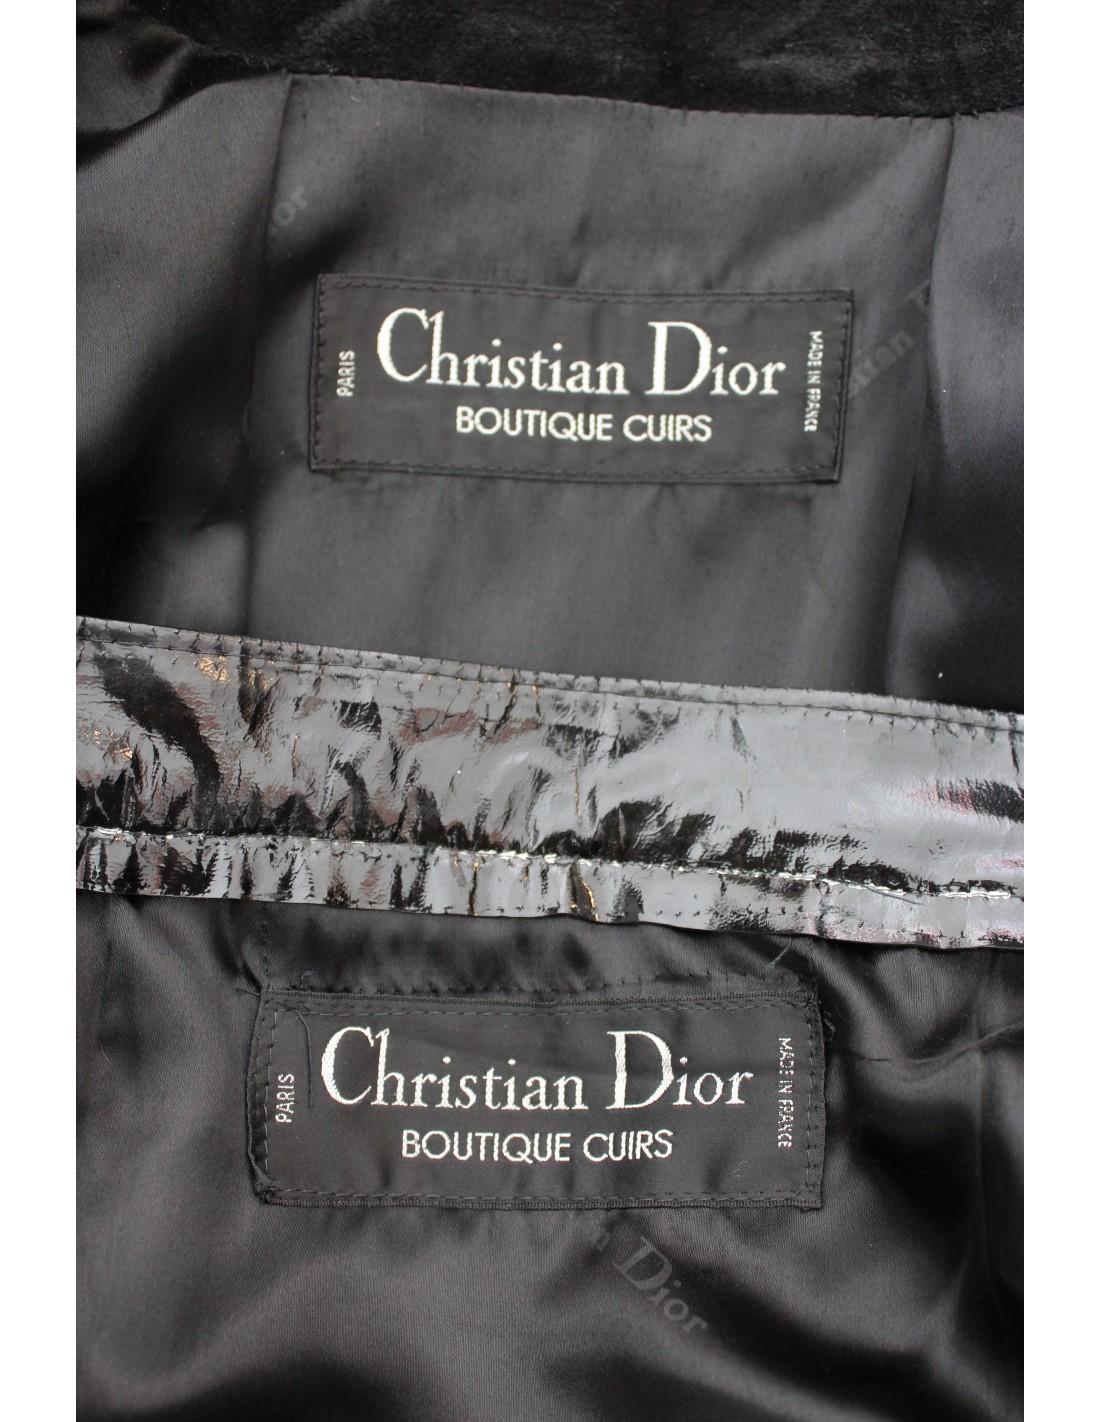 Christian Dior Boutique Black Suede Skirt Suit 1980s 4